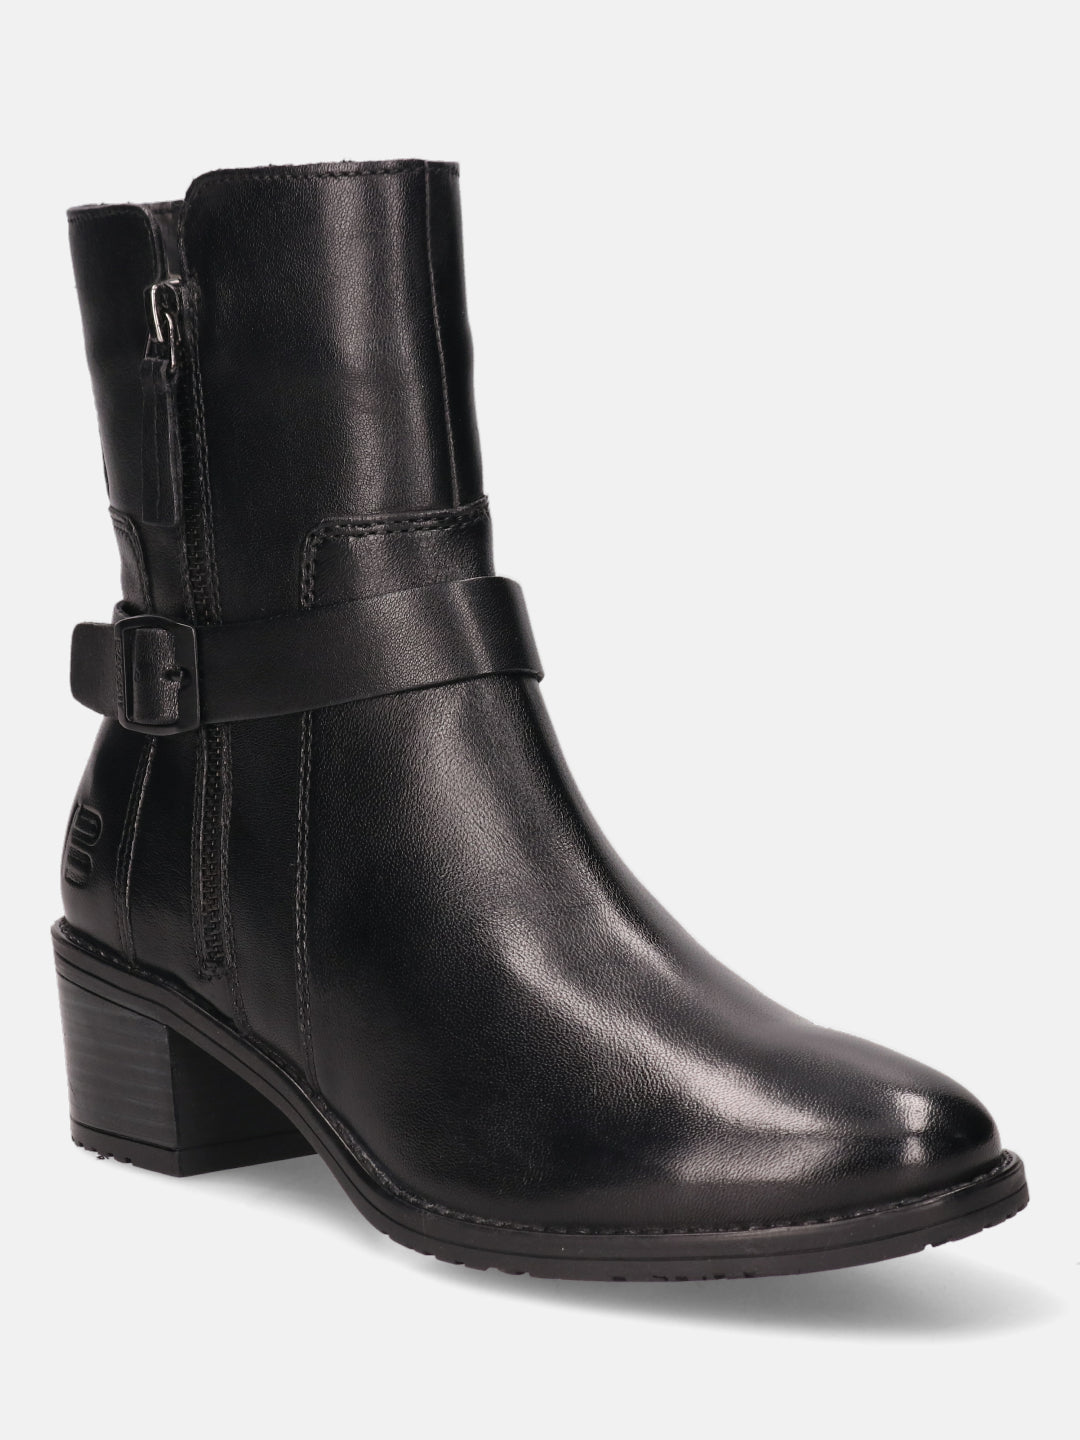 BAGATT Premium Leather Black Ankle Boots